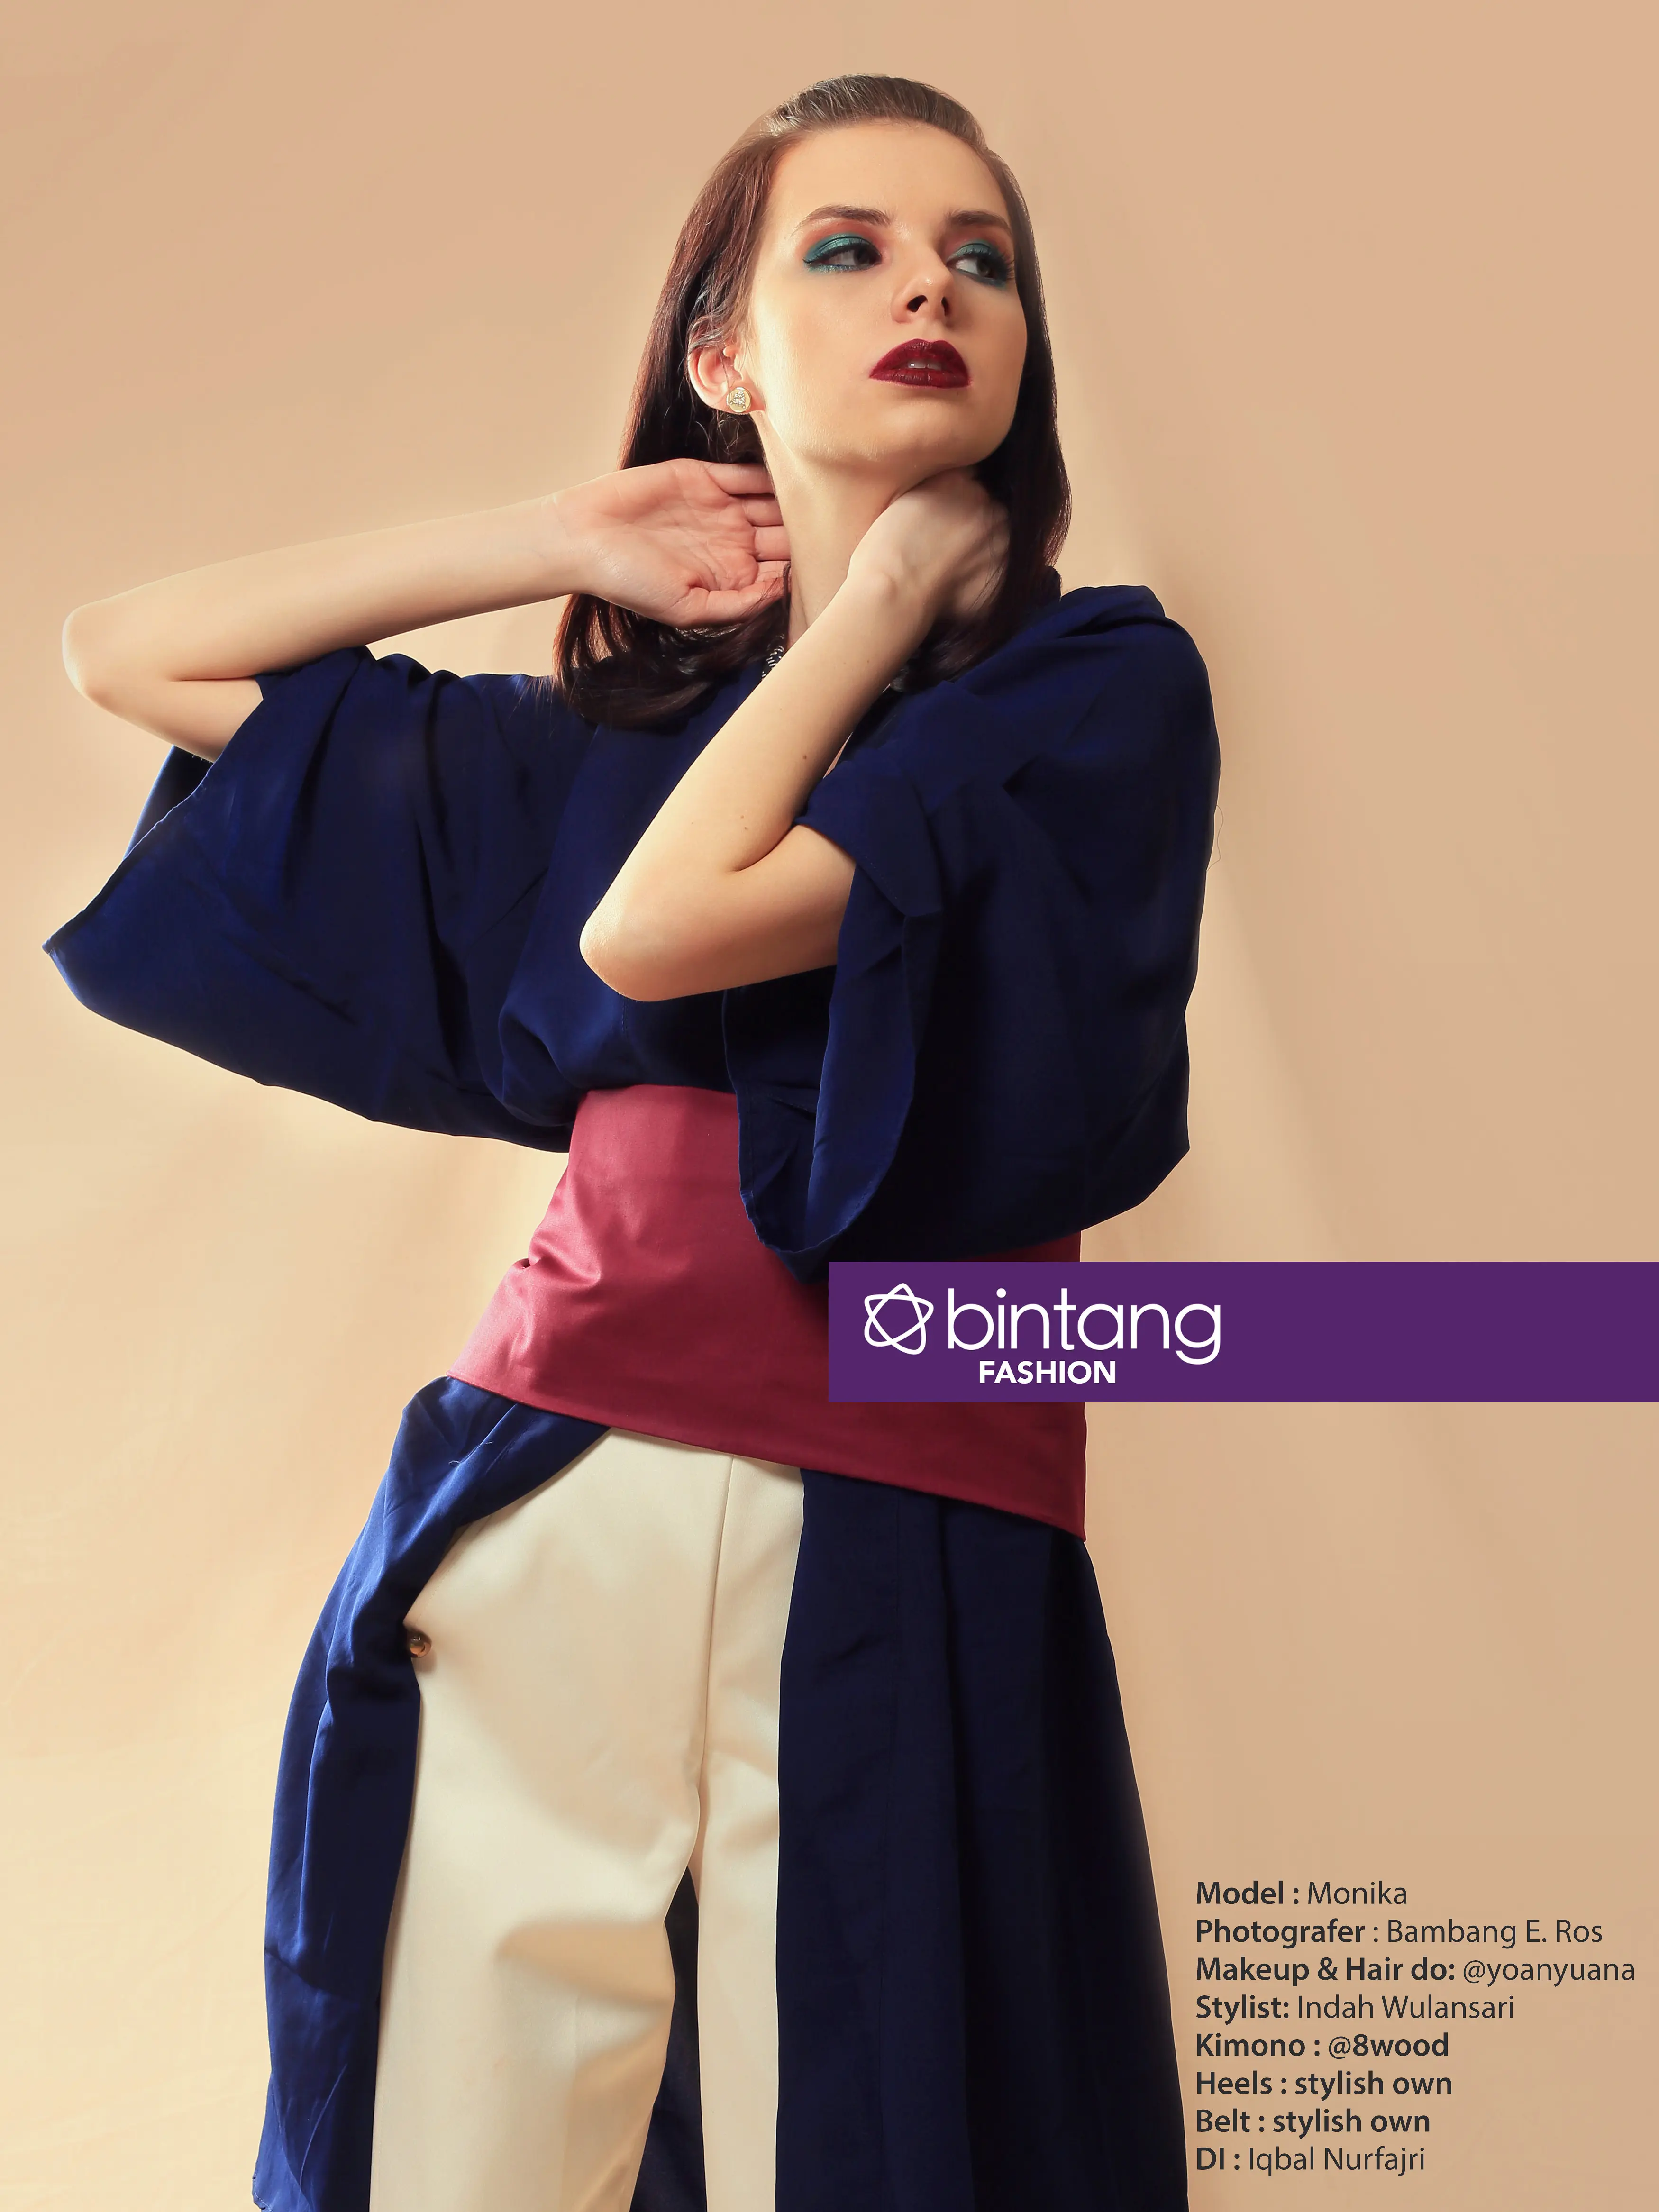 Kimono @8wood dikombinasikan bersama tailored trousers dan belt. (Bambang E. Ros / Bintang)